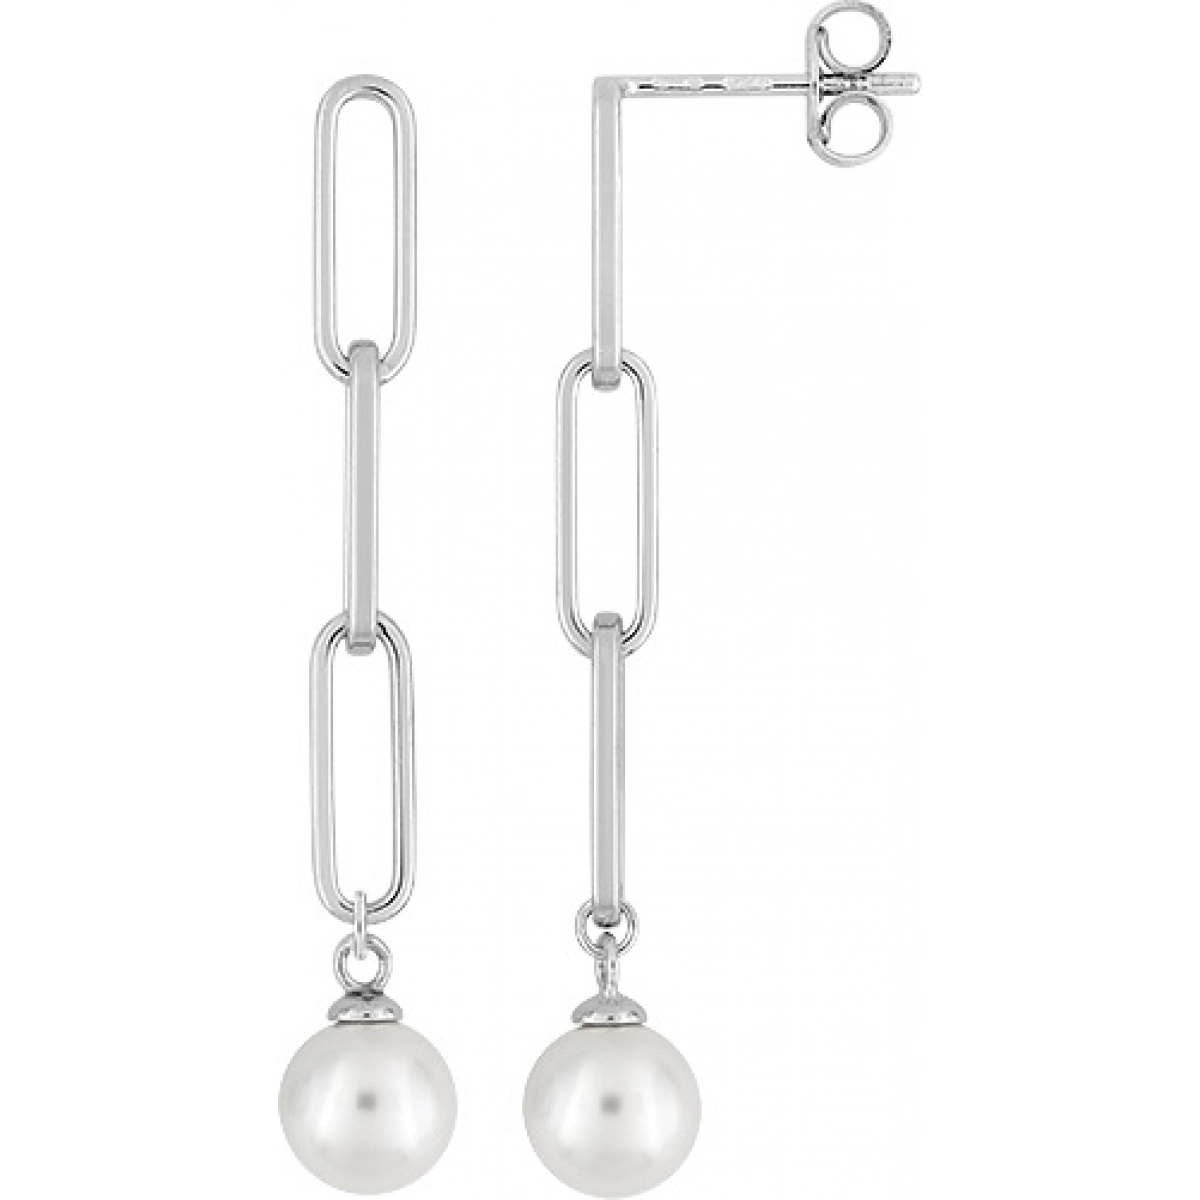 Earrings pair imitation pearl rh 925Silver Lua Blanca  458786